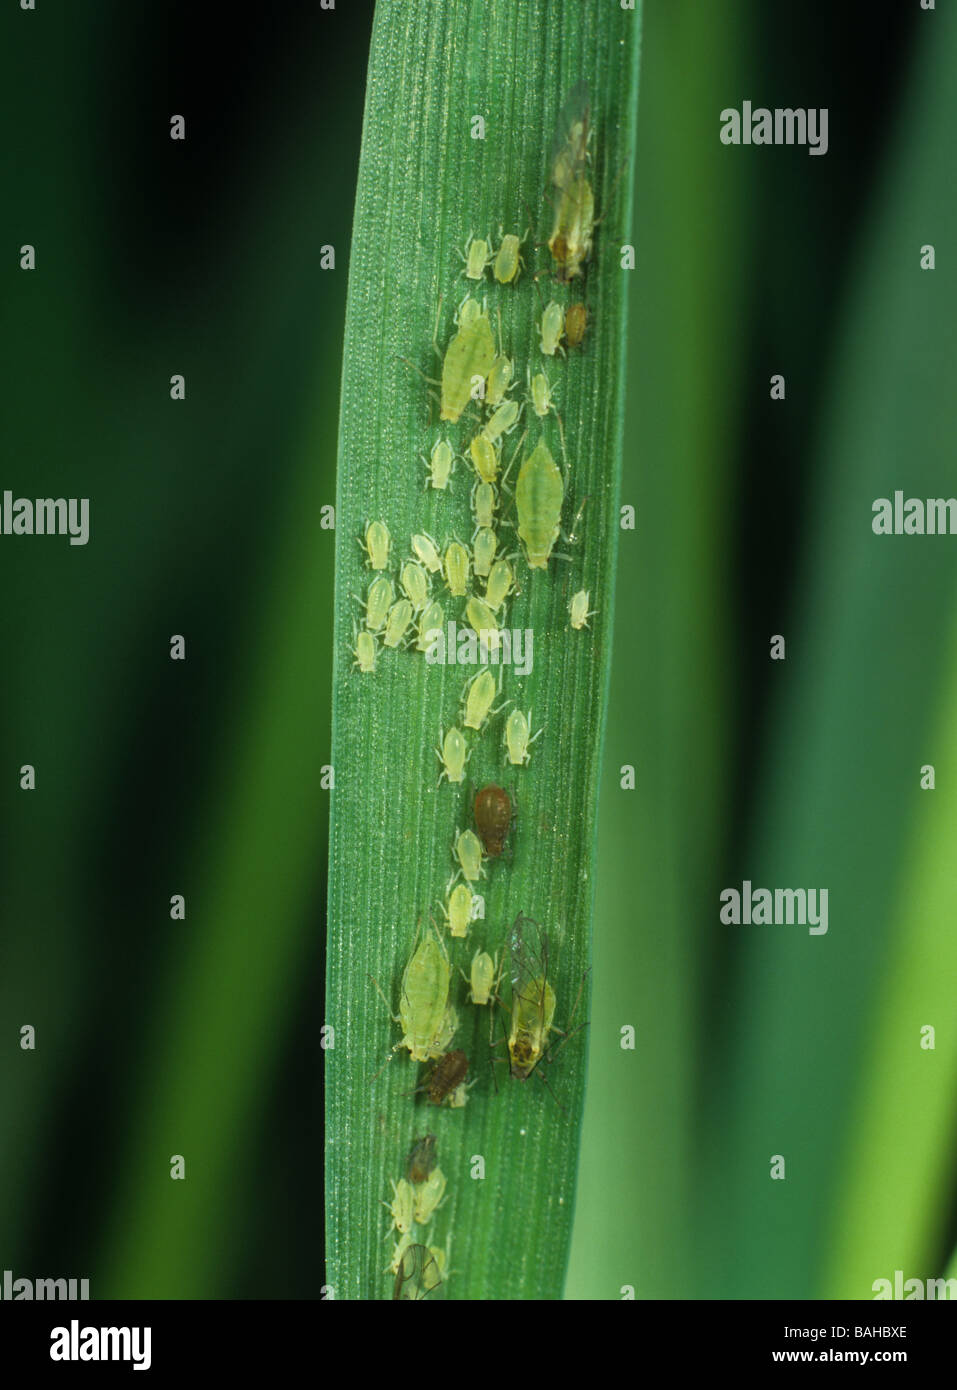 Rose grain aphids Metopolophium dirhodum and bird cherry aphids Rhopalosiphum padi on barley Stock Photo